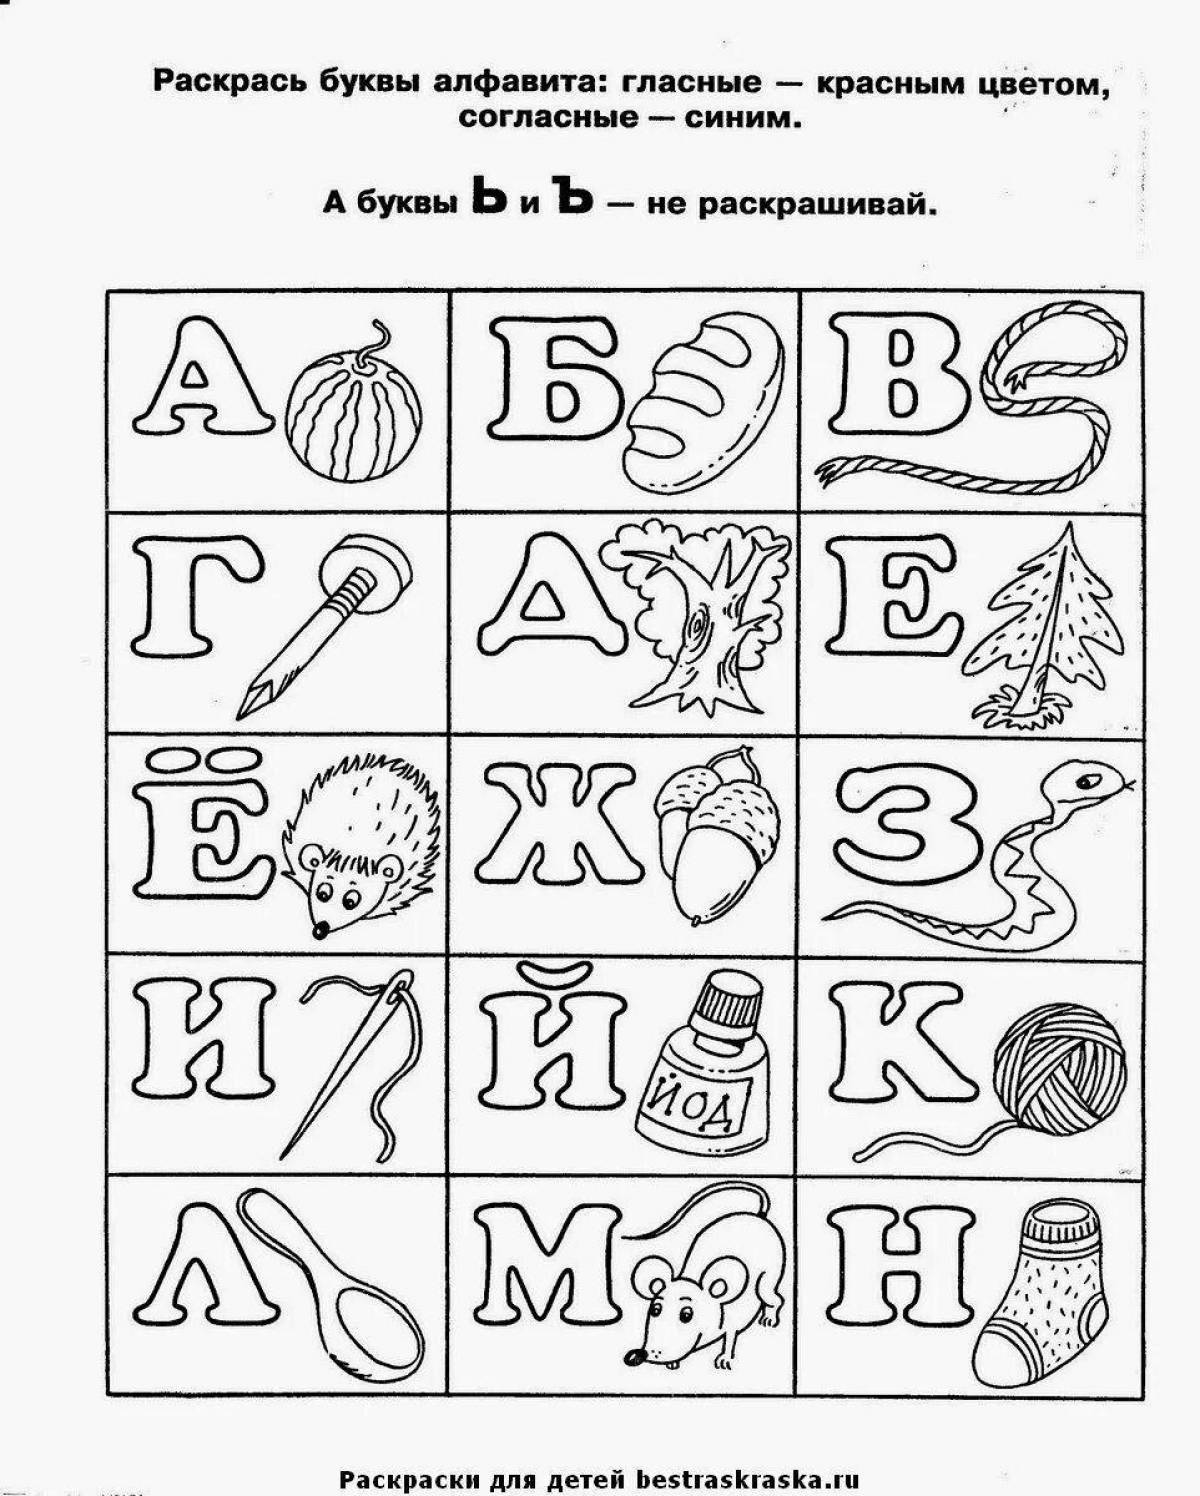 Russian alphabet #9